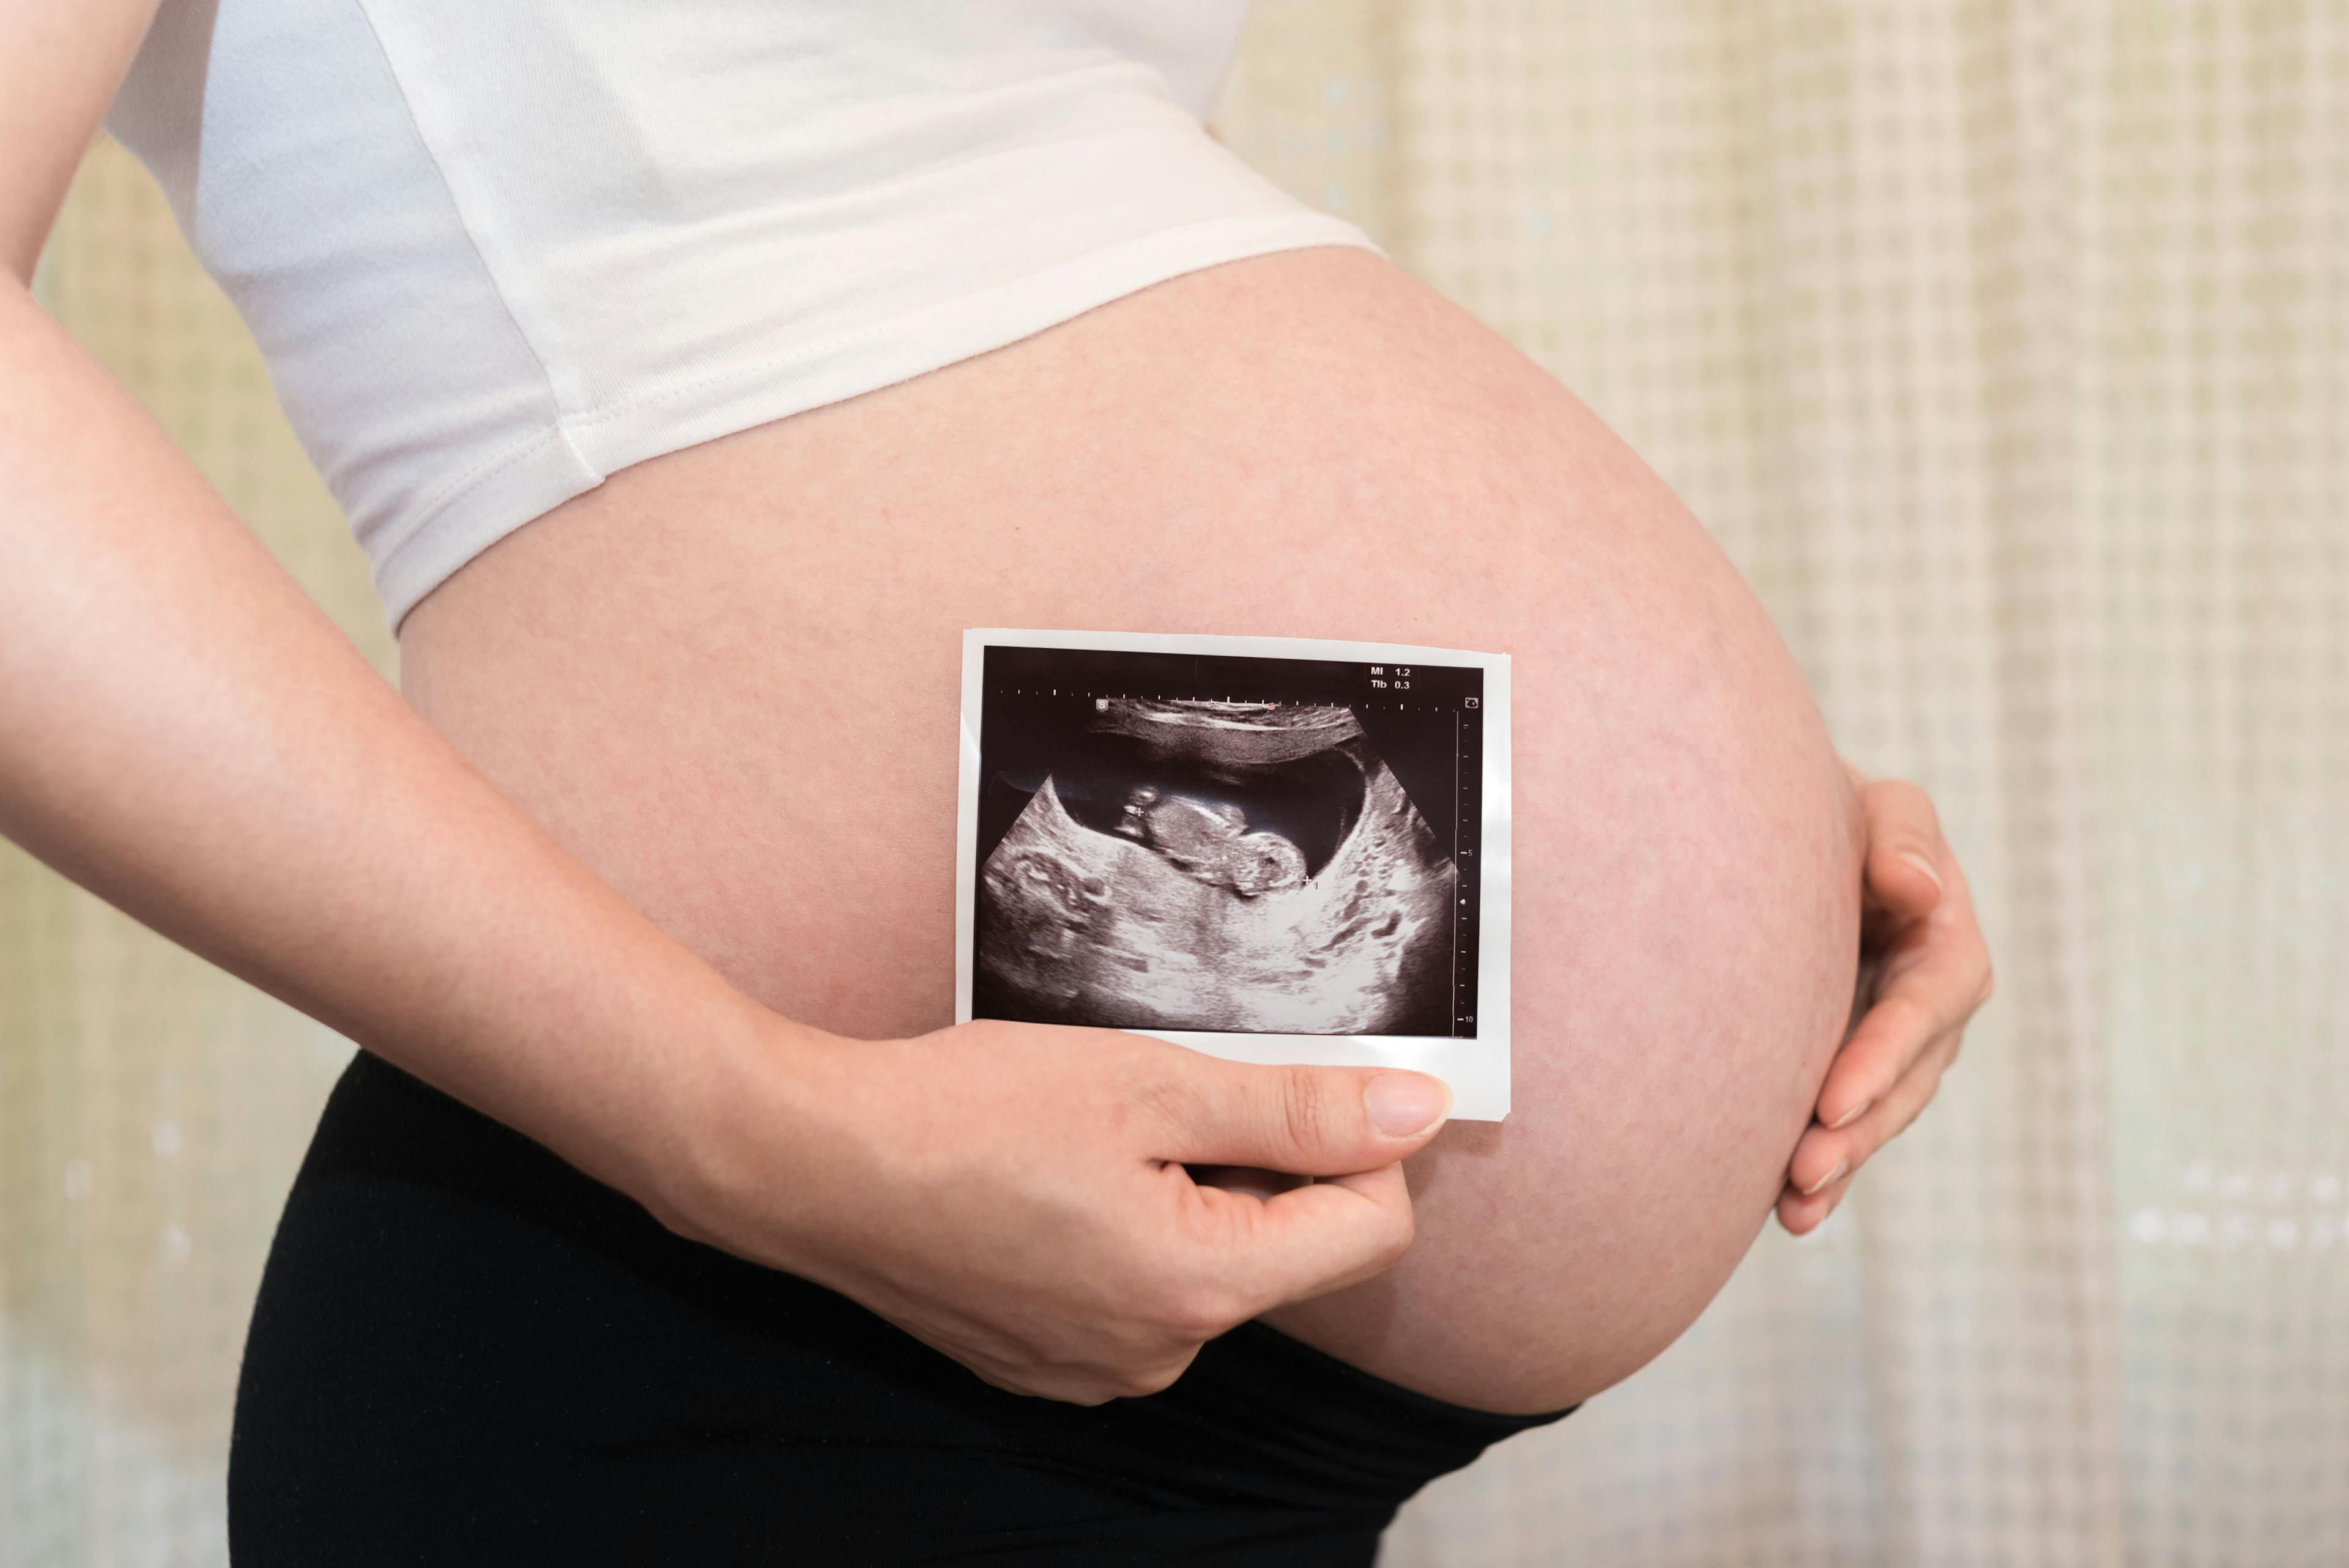 Noninvasive prenatal screening in twin pregnancies